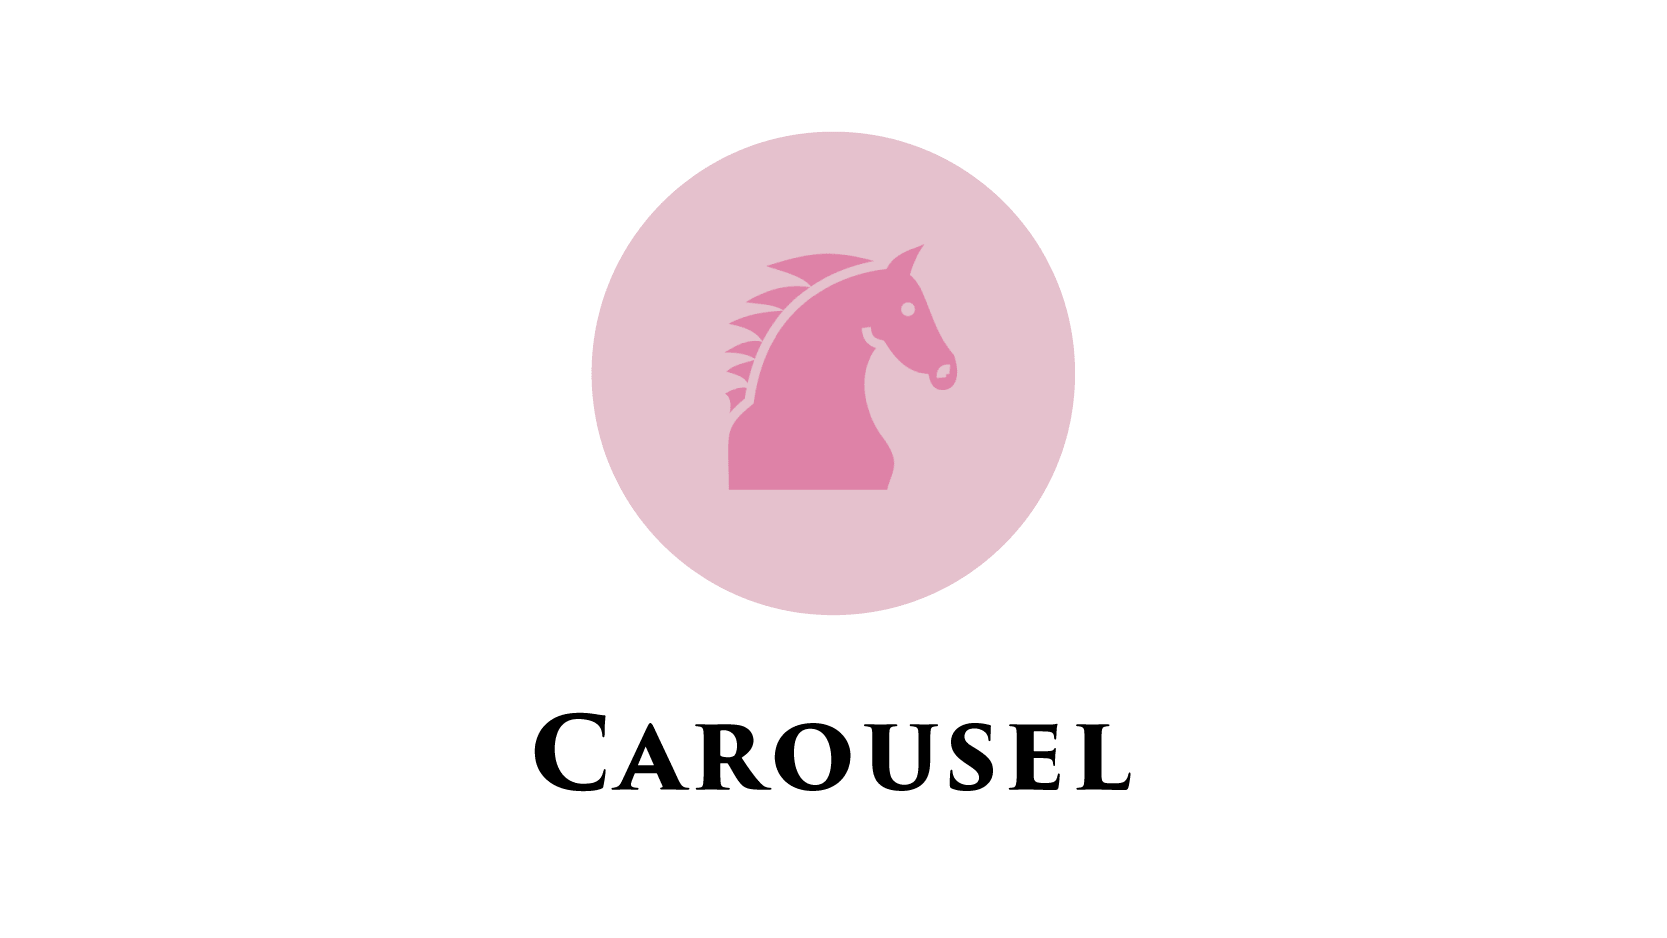 pairs_simple_icons_ペアーズアイコン_carousel